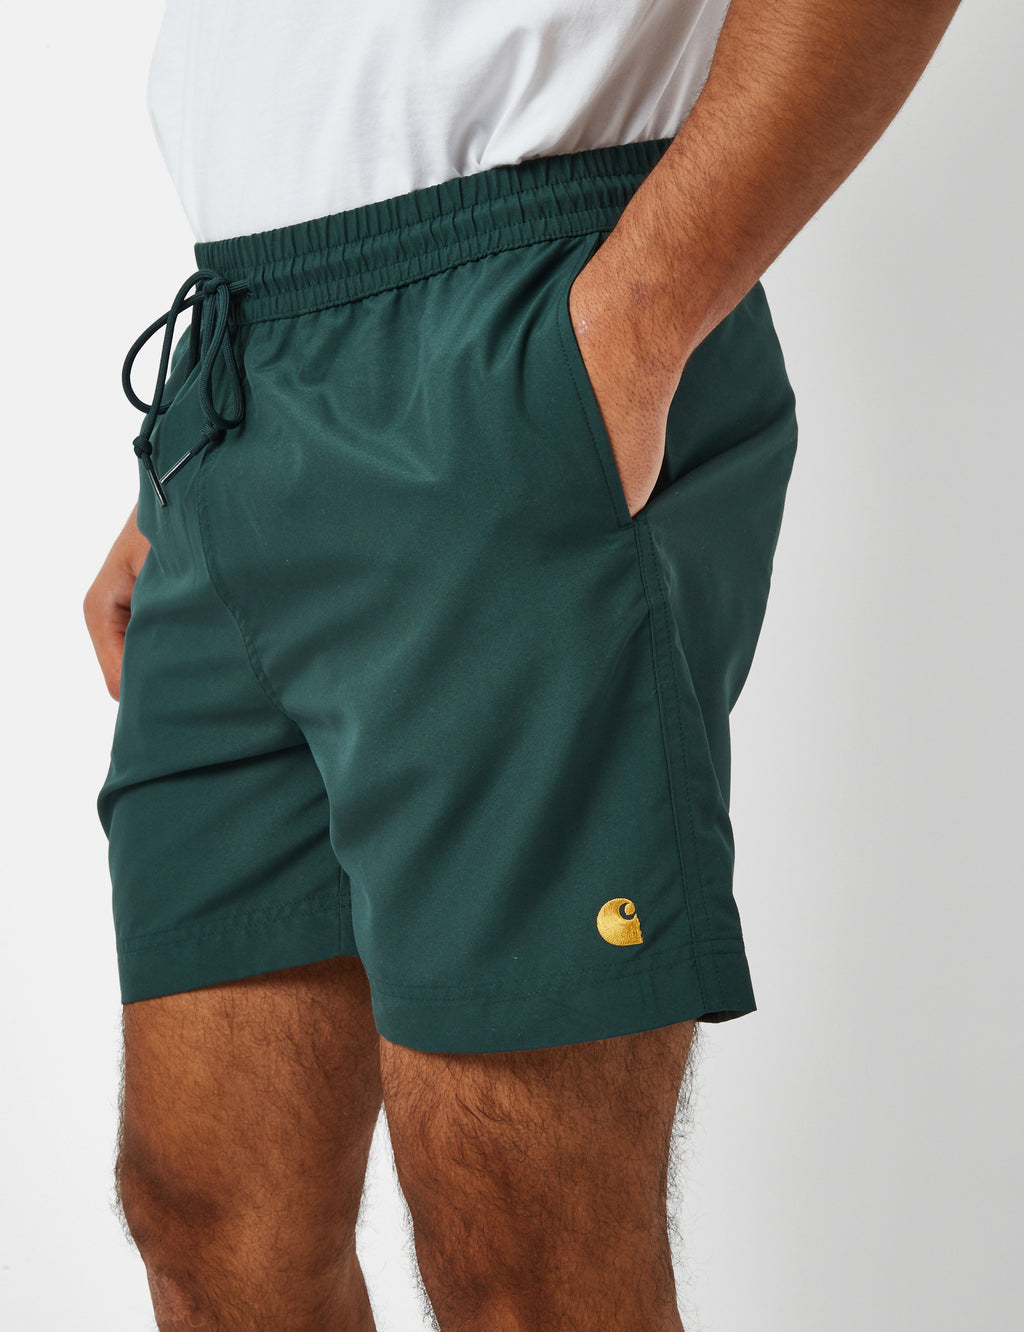 Men's Repellent Softshell Fleece Lined Snow Ski Pants